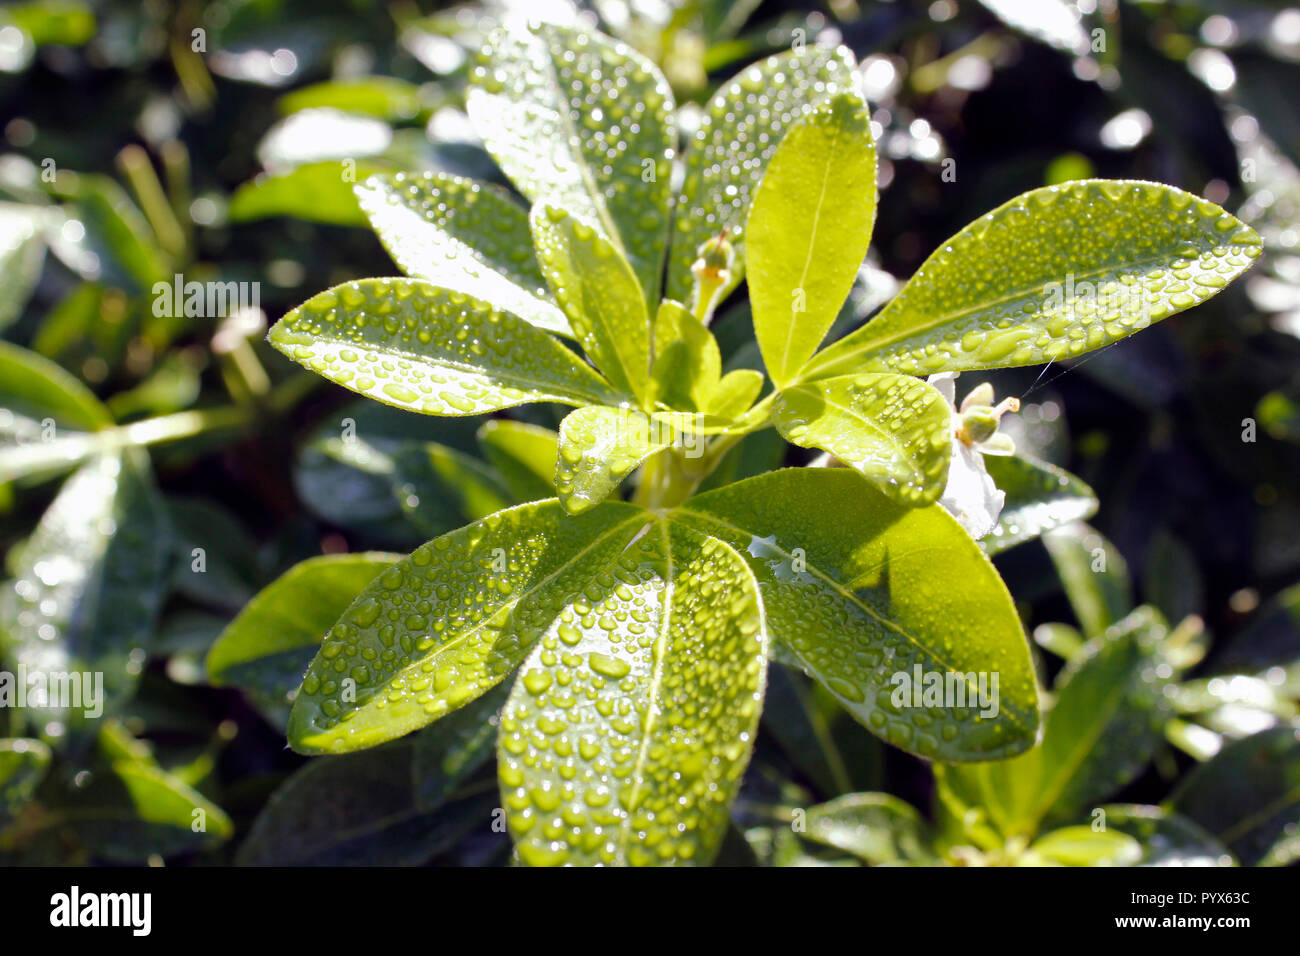 Raindrops cling to fresh green shoots of the Choisya ternata plant Stock Photo